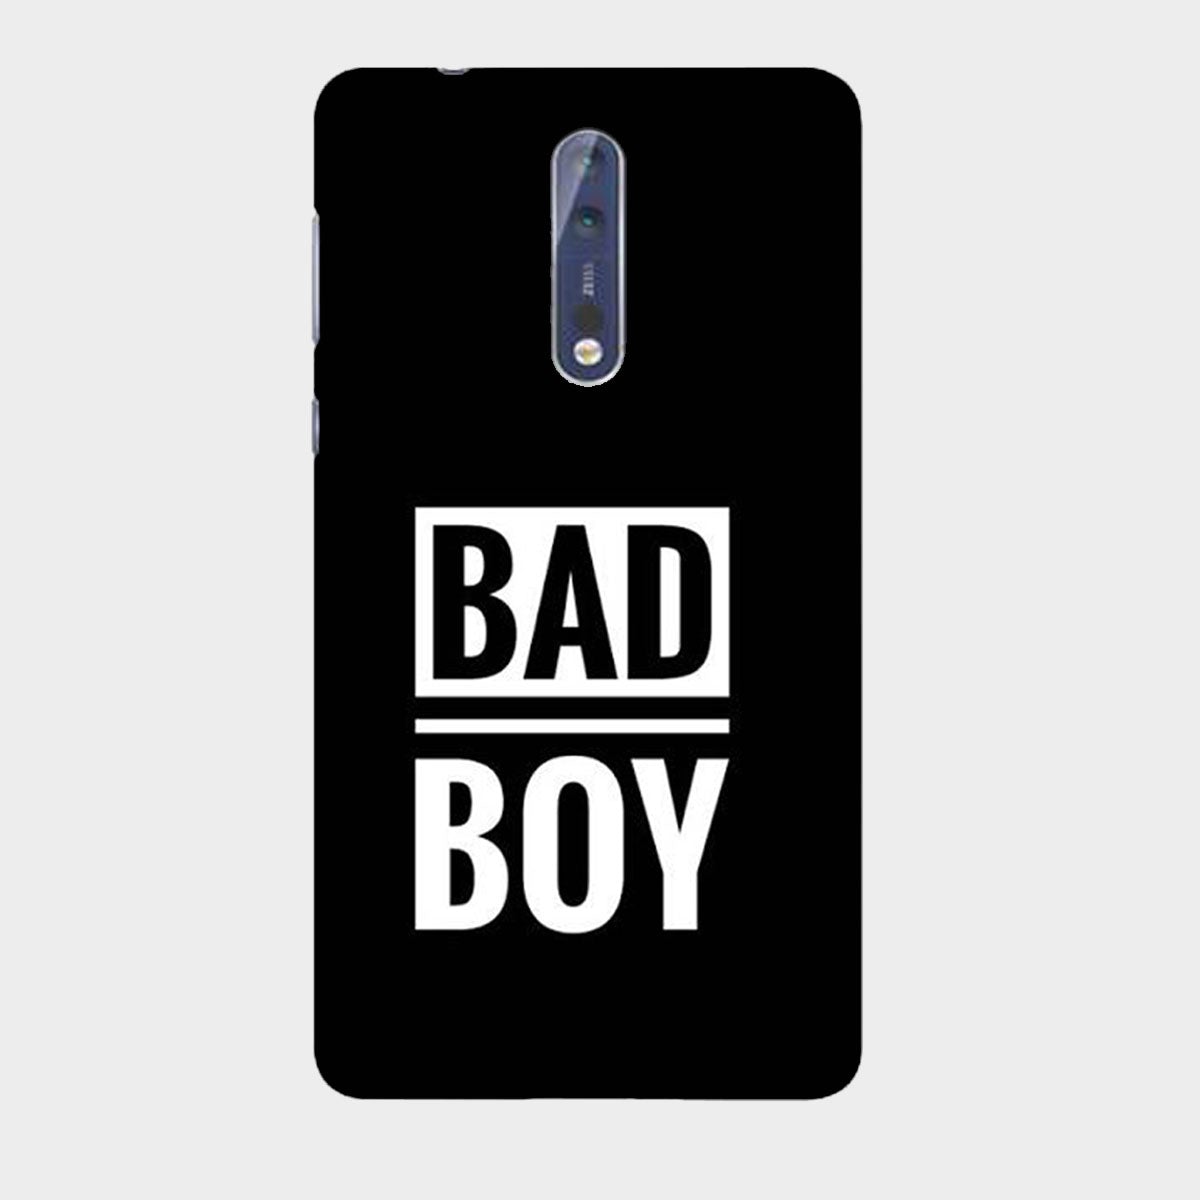 Bad Boy - Mobile Phone Cover - Hard Case